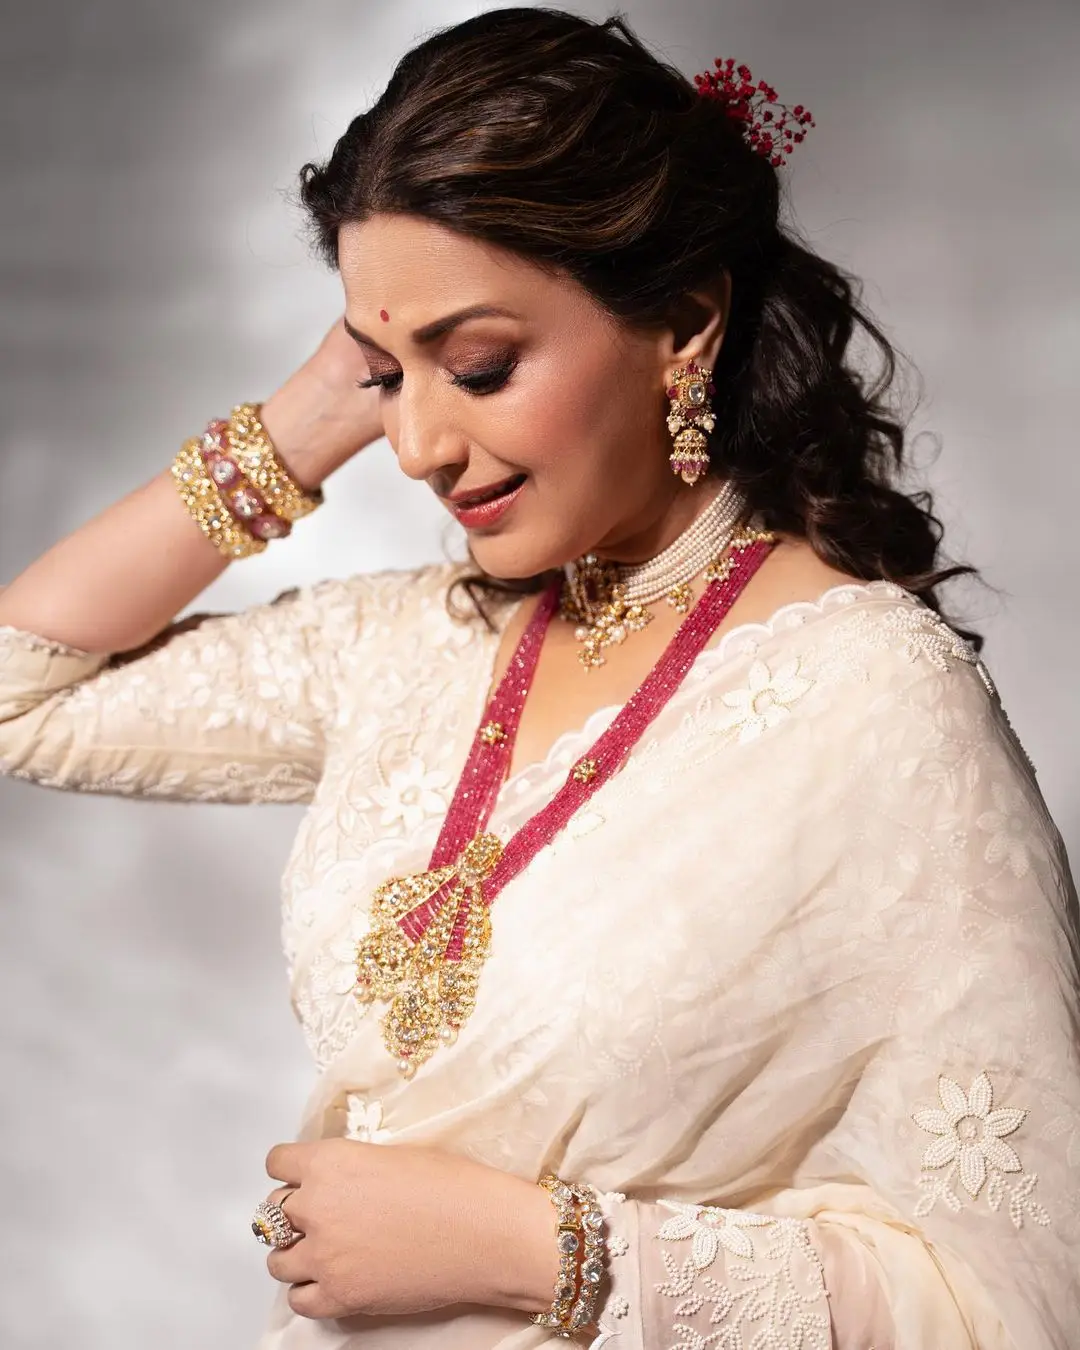 Sonali Bendre Mesmerizing Looks In Beautiful White Saree